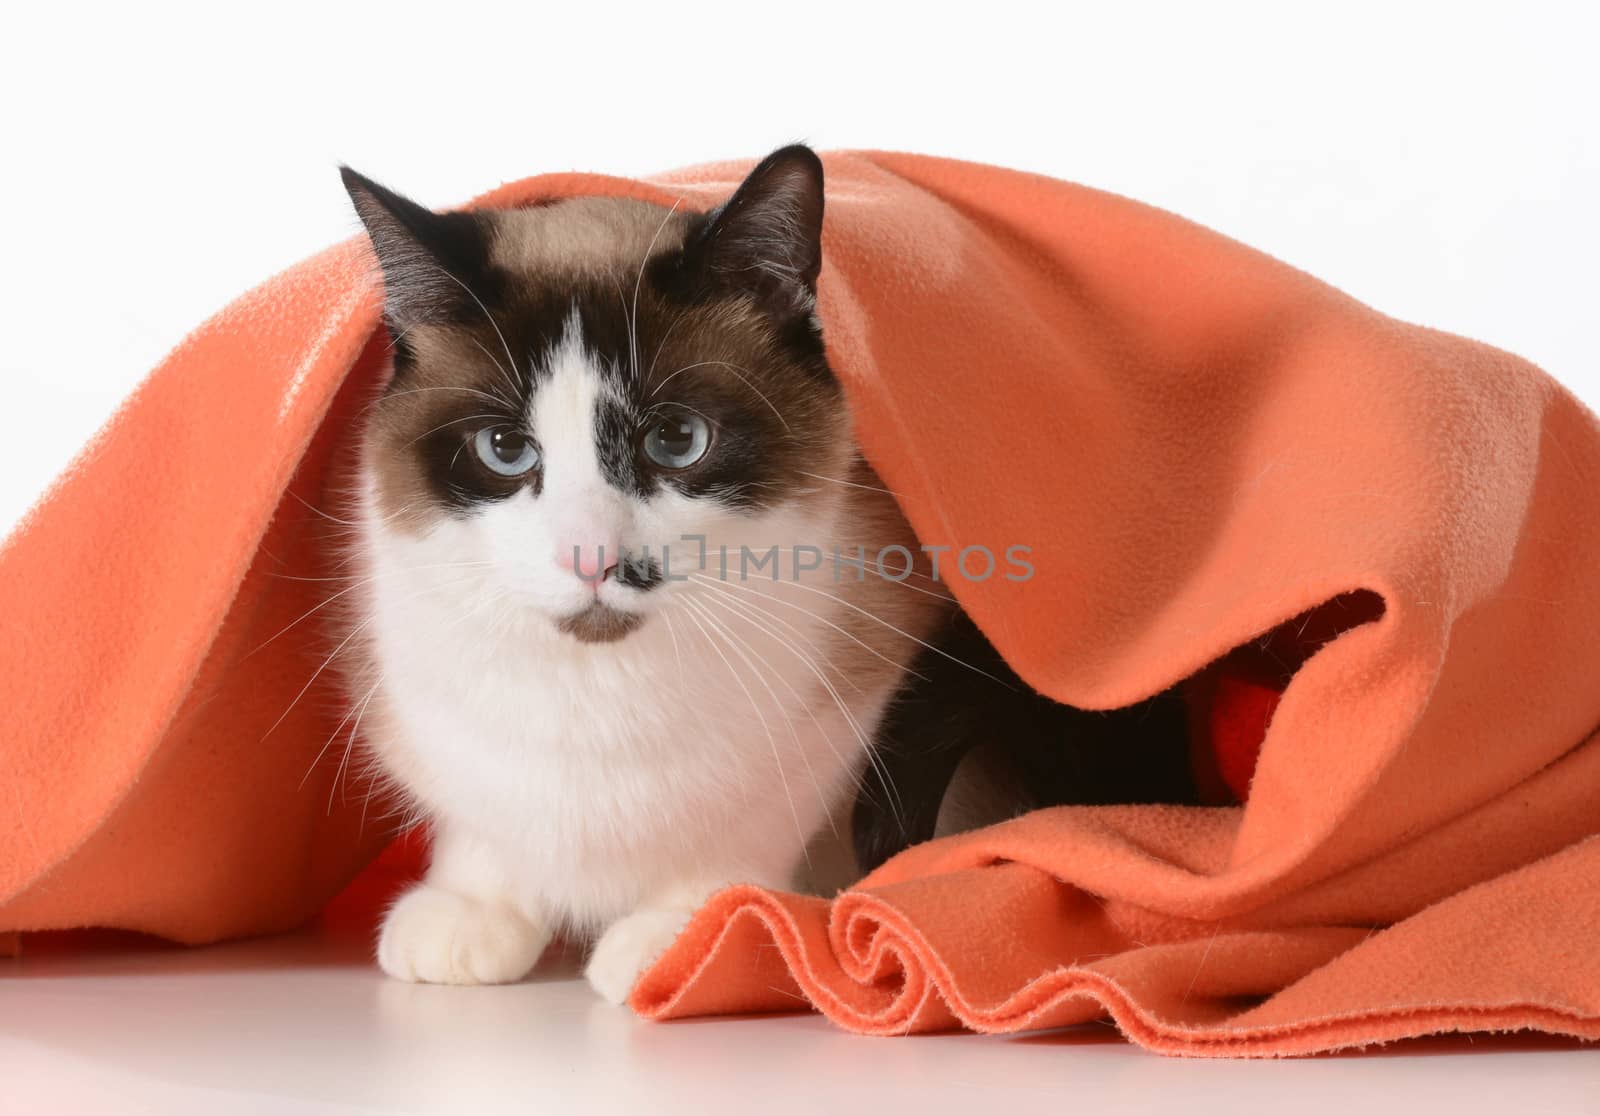 cat hiding under blanket by willeecole123